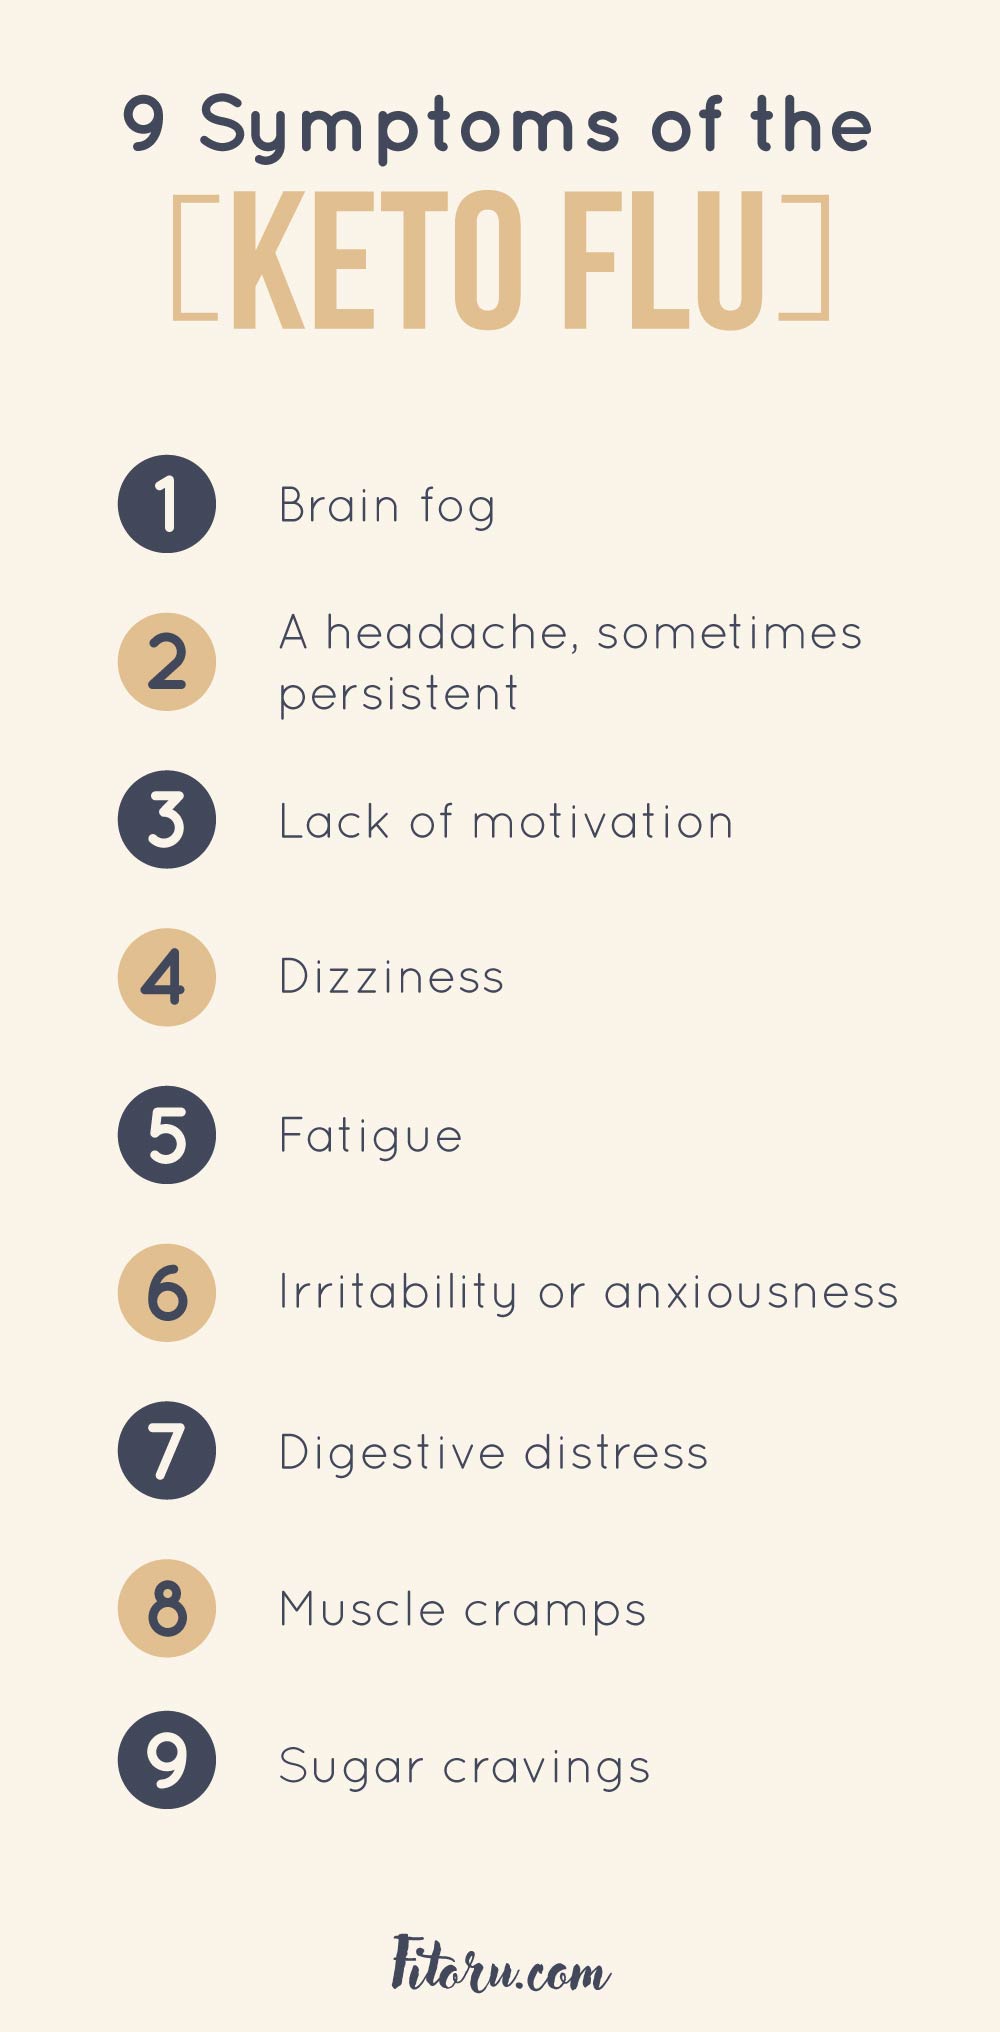 Here are 9 symptoms of the keto flu.